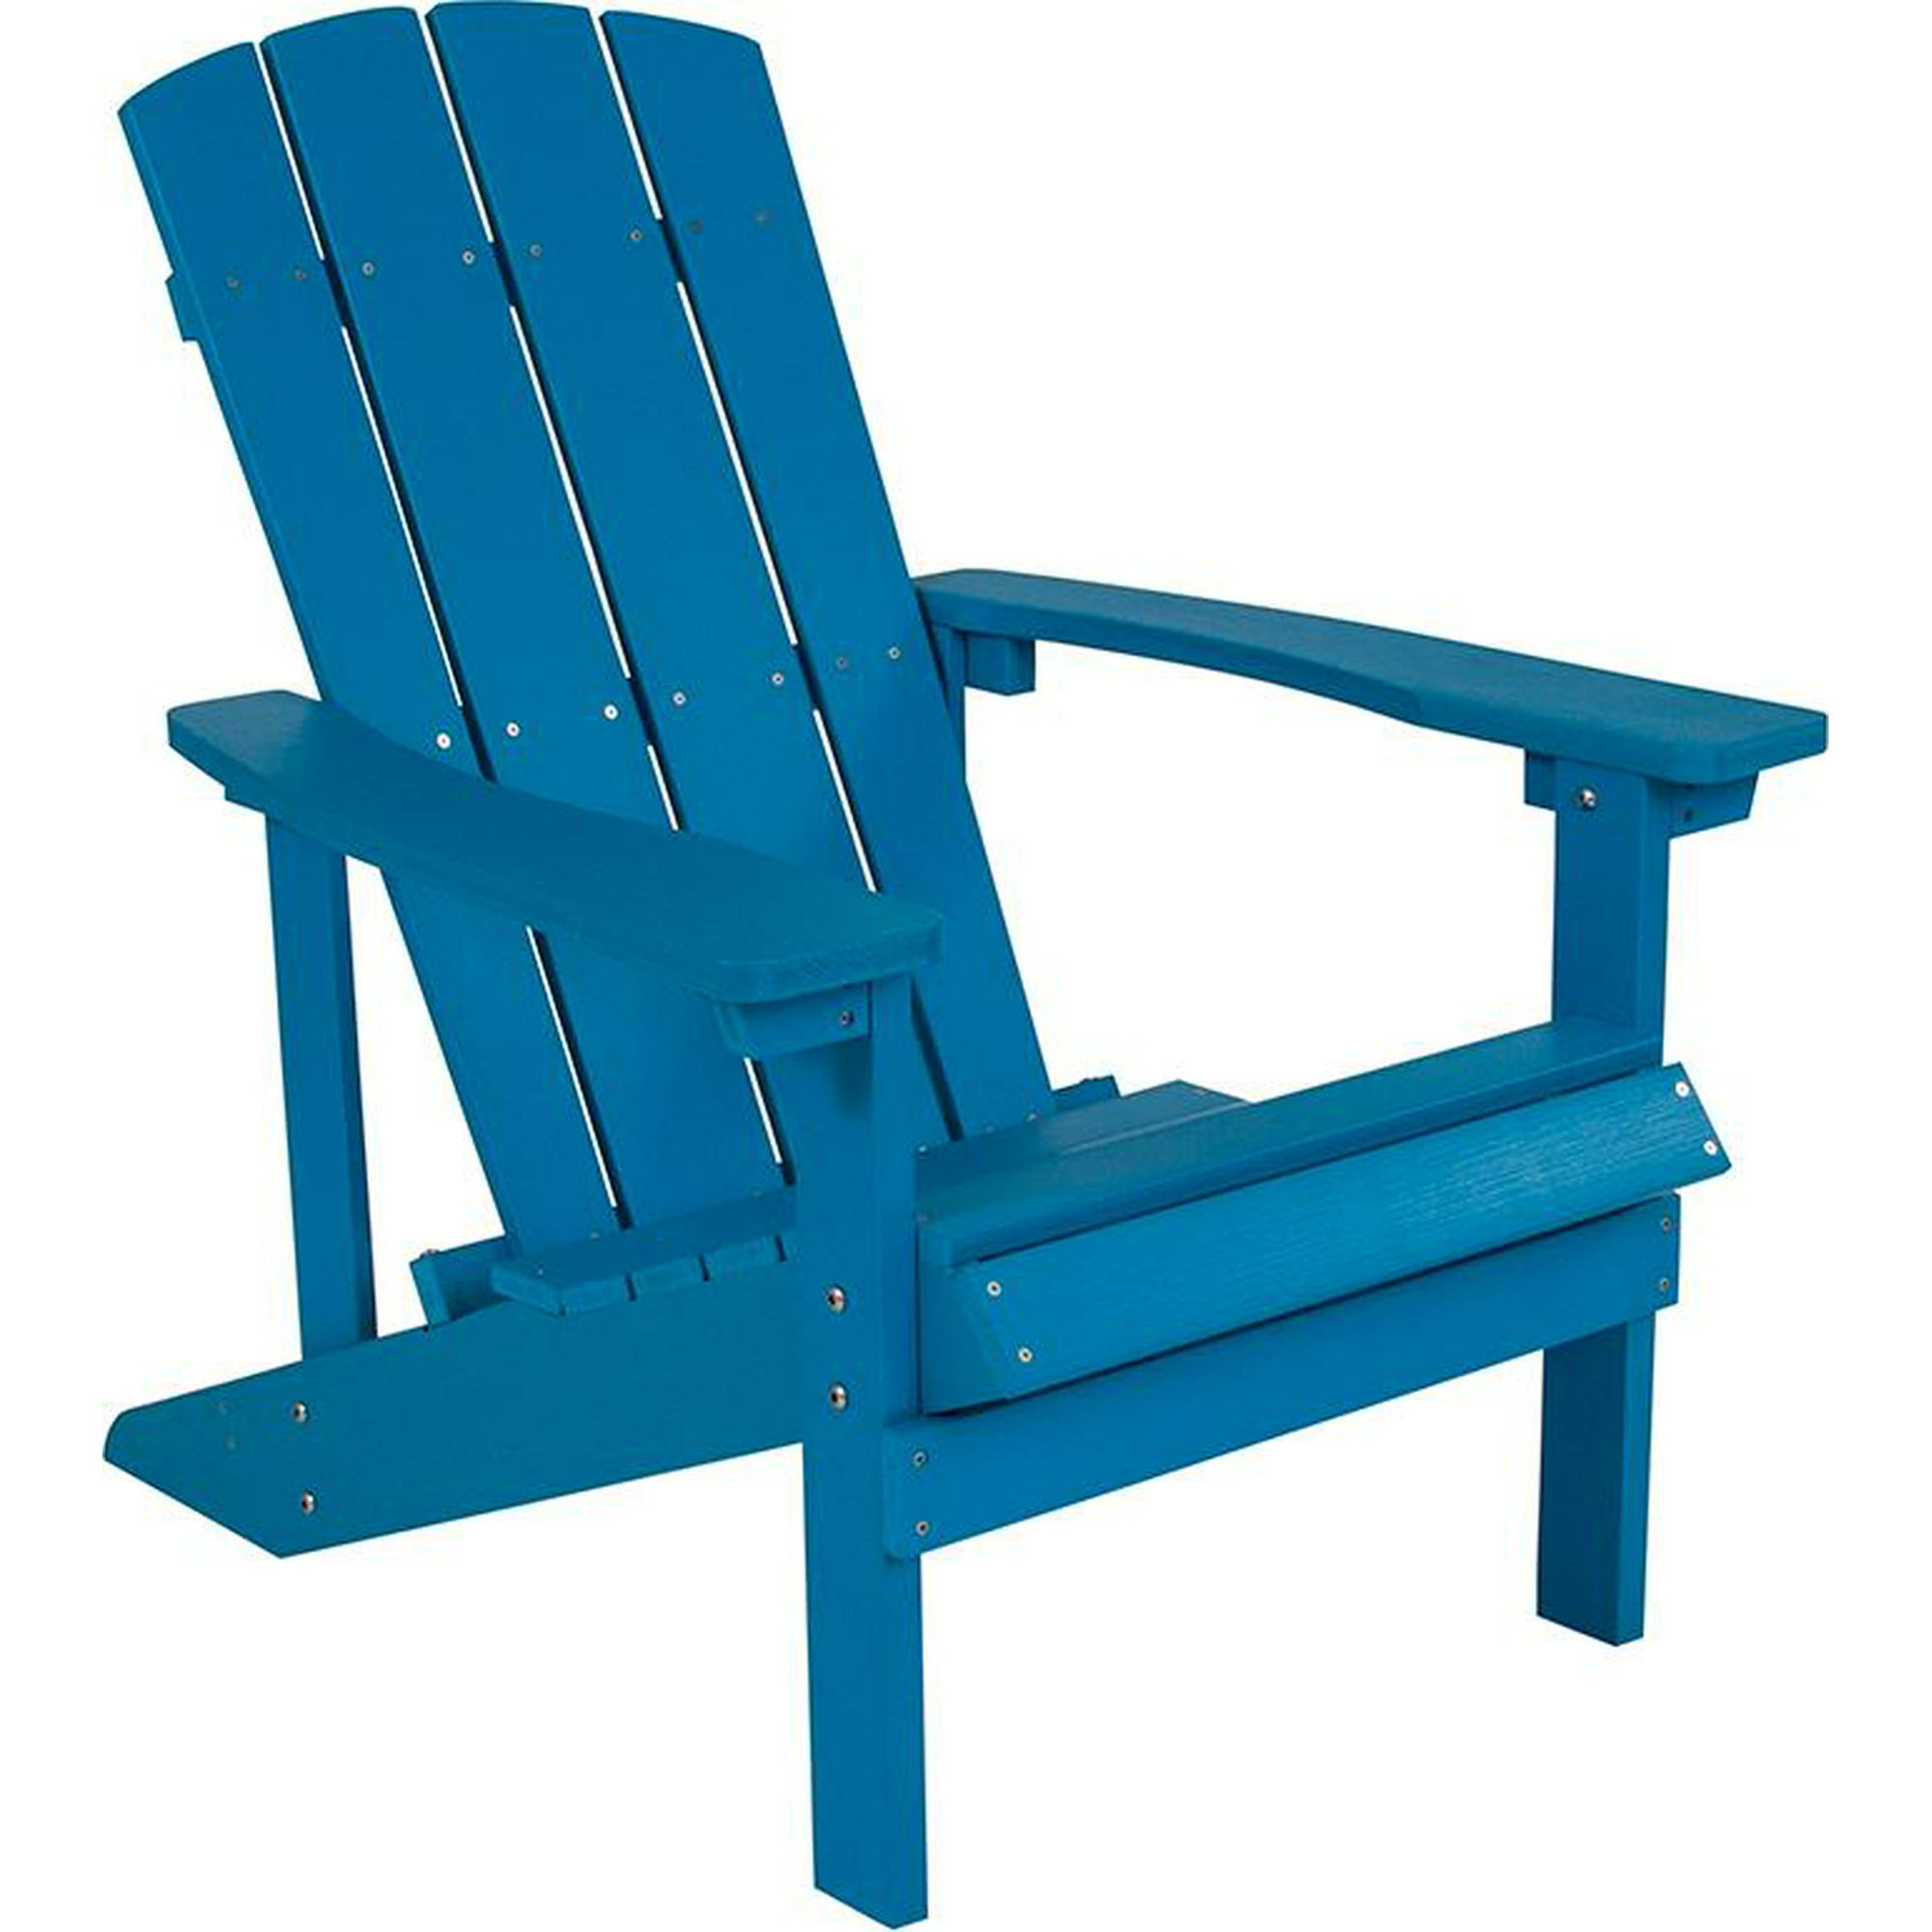 Yellow Wood Adirondack Chair, Plastic Wood Adirondack Chairs Canada